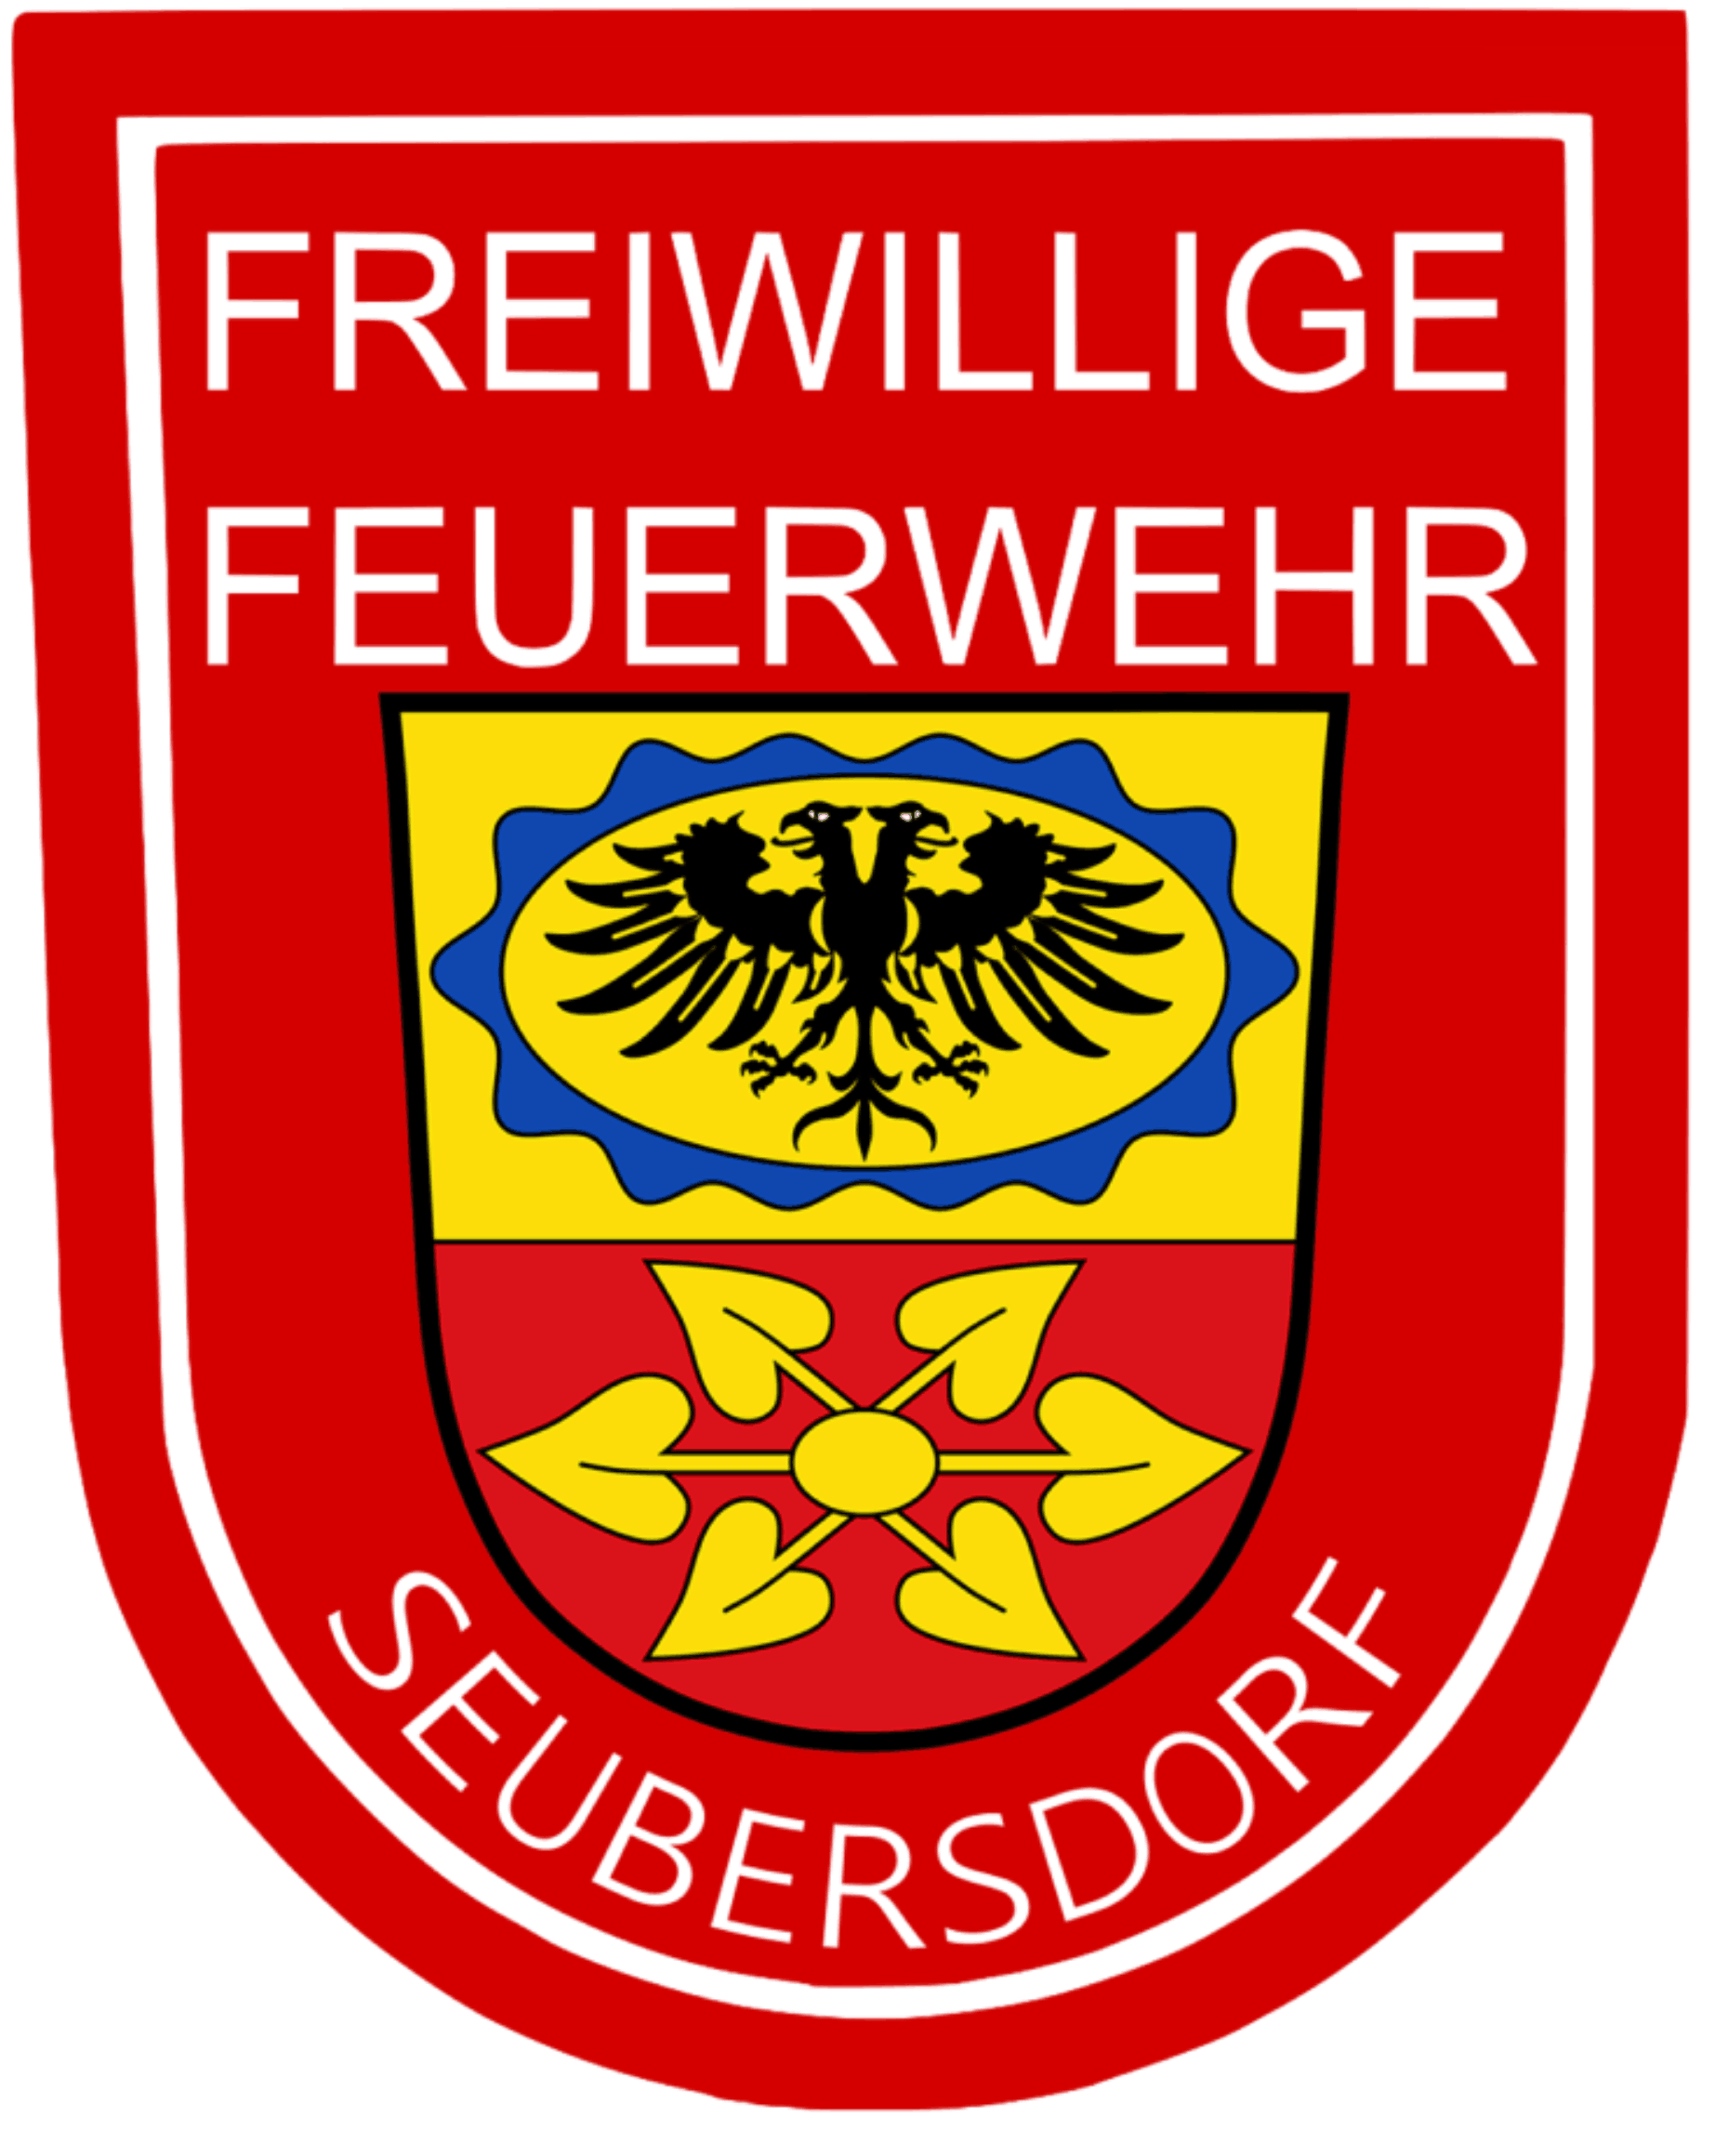 Freiwillige Feuerwehr Seubersdorf e.V.